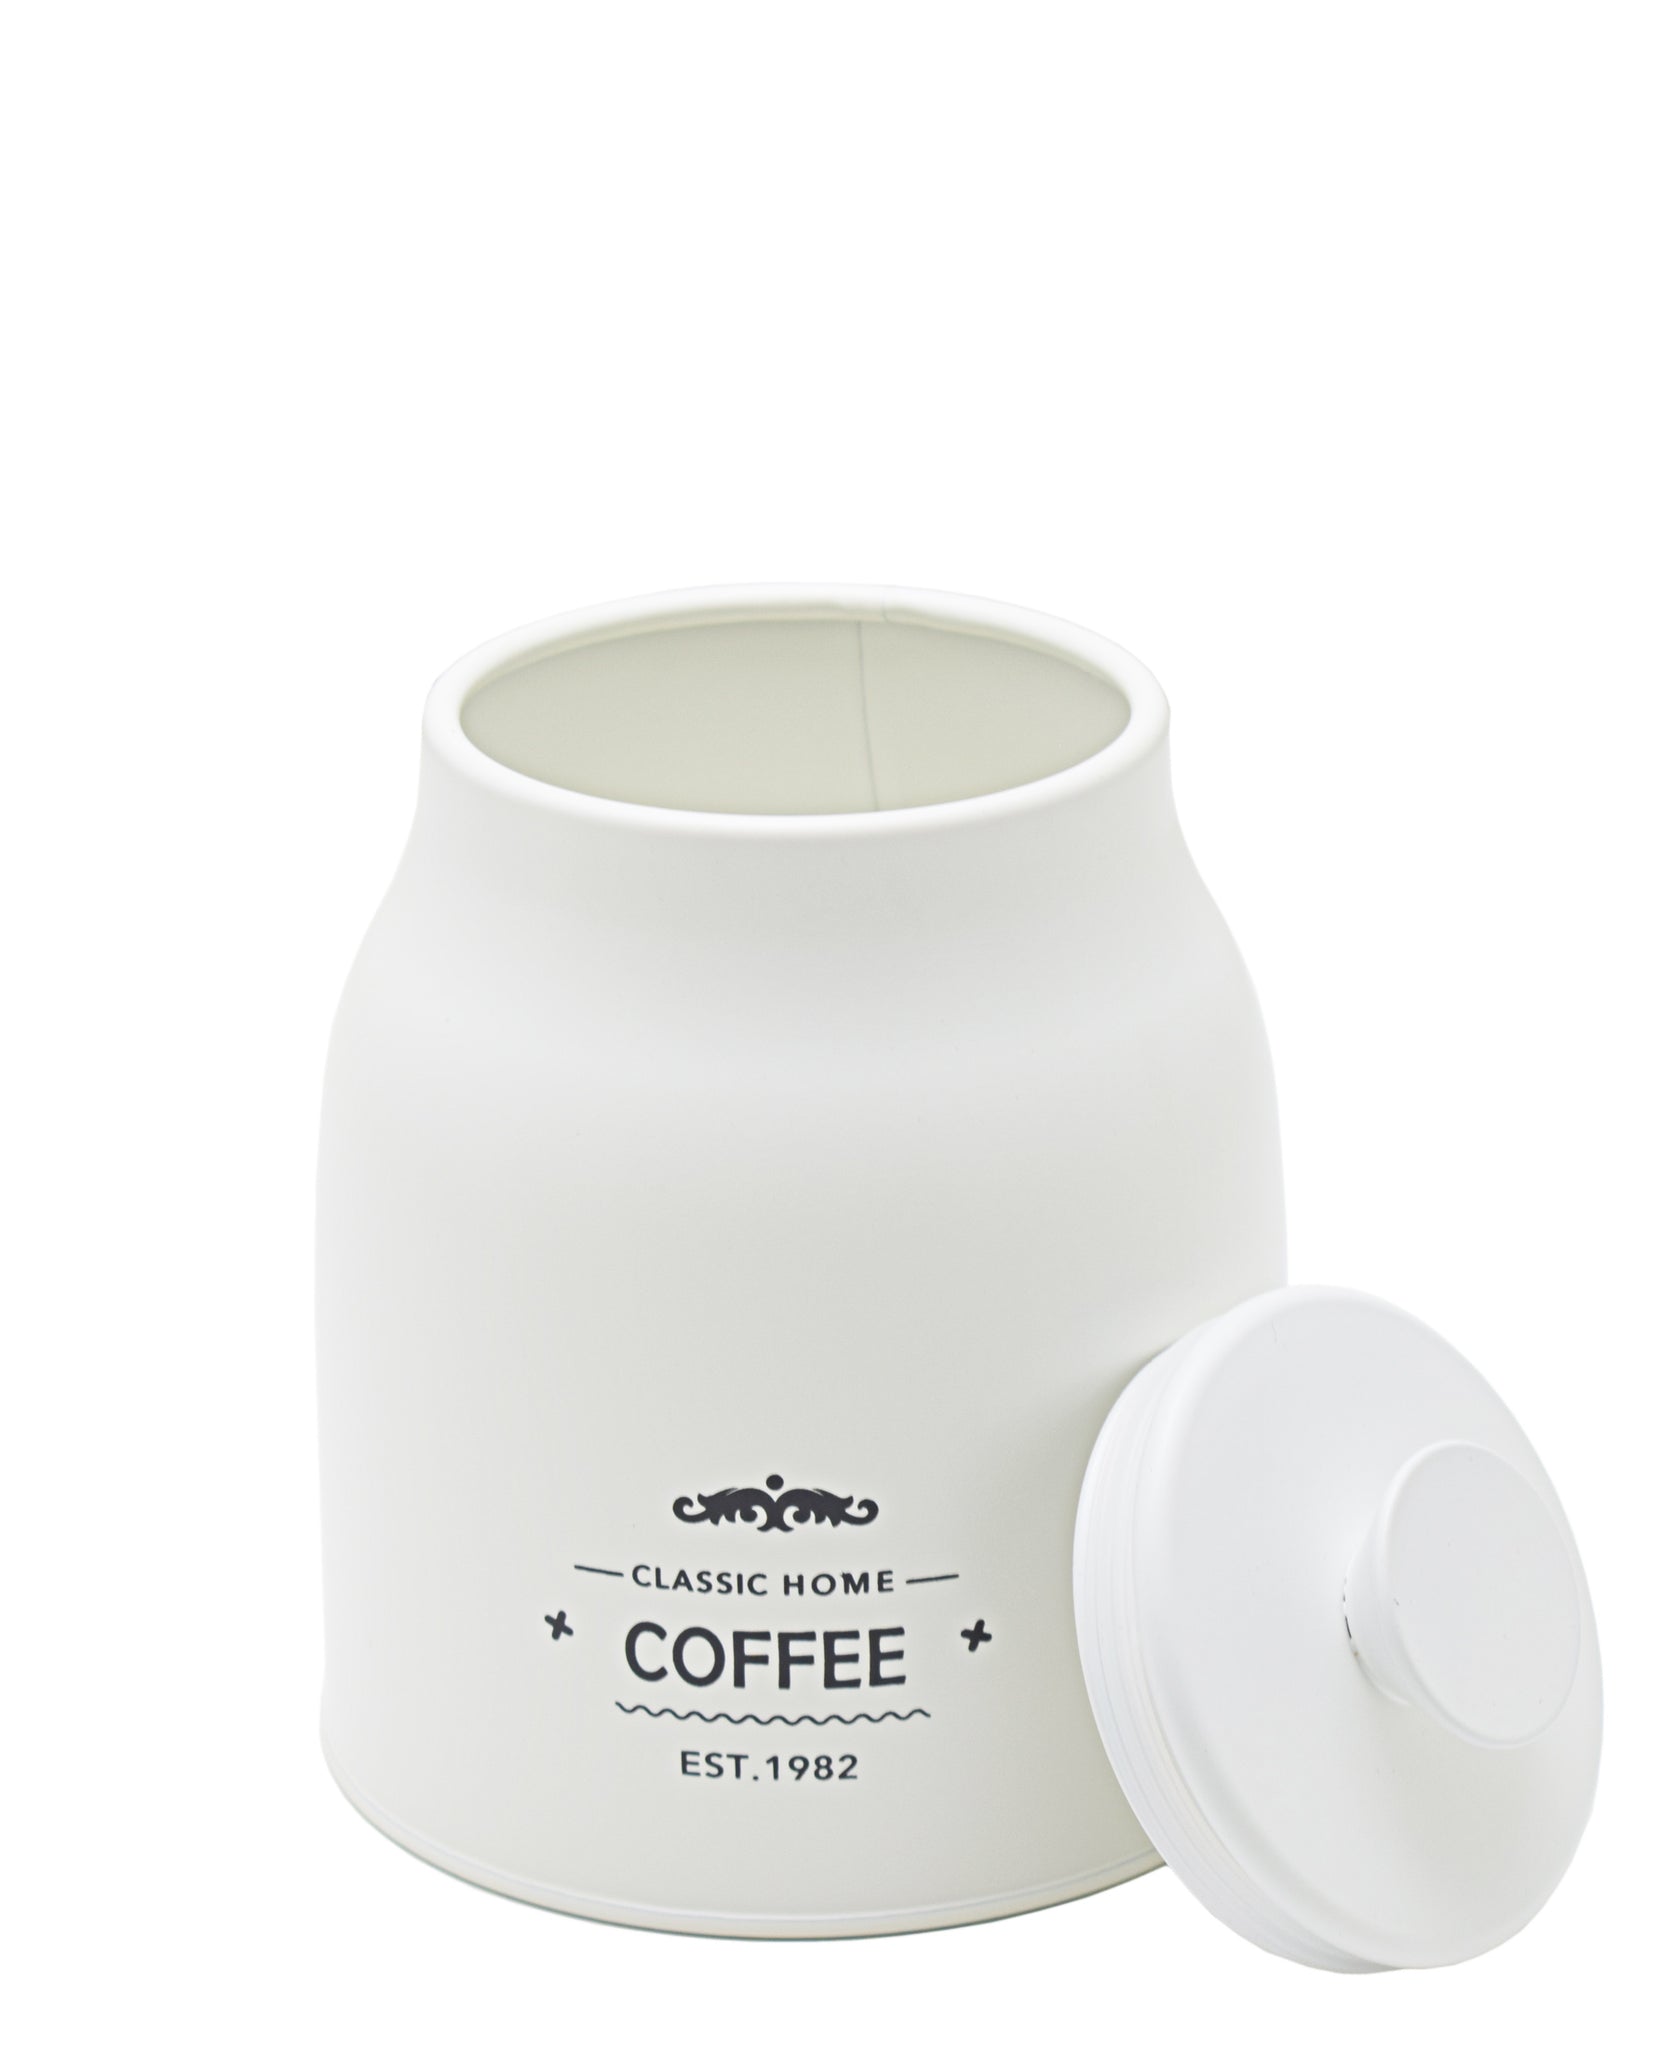 Aqua Iron White Coffee Canister - White